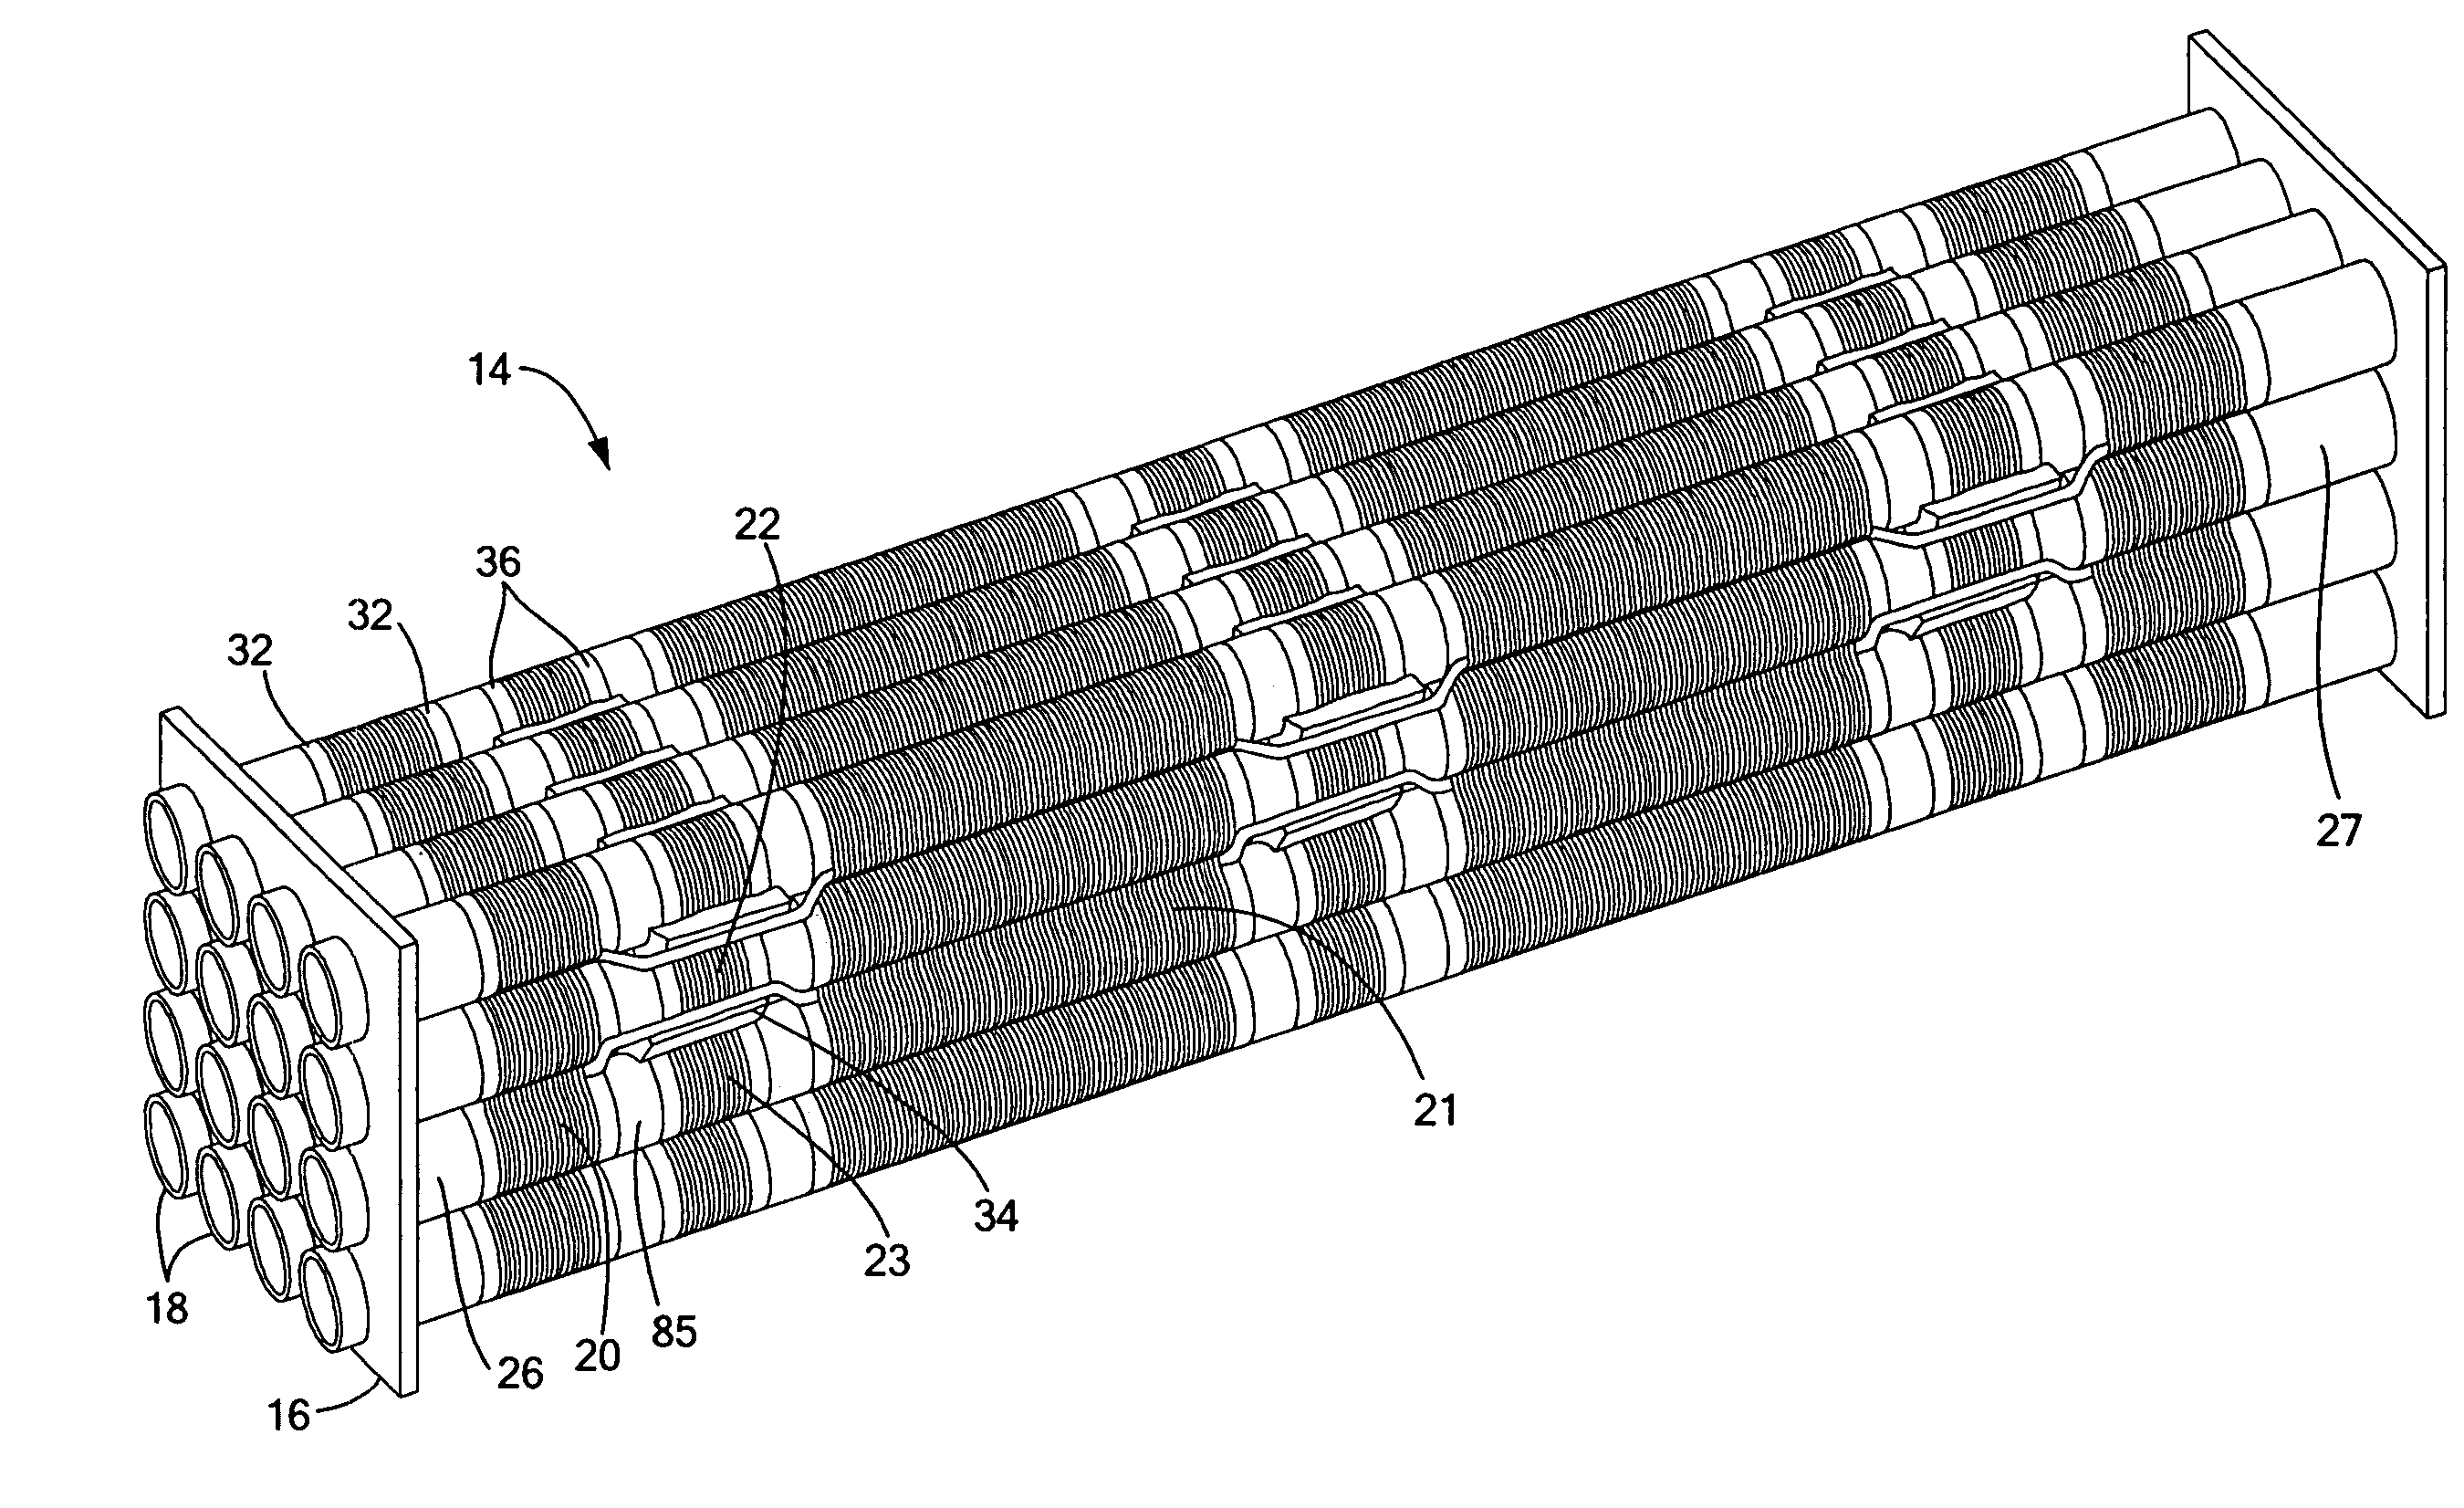 Interconnection of bundled solid oxide fuel cells